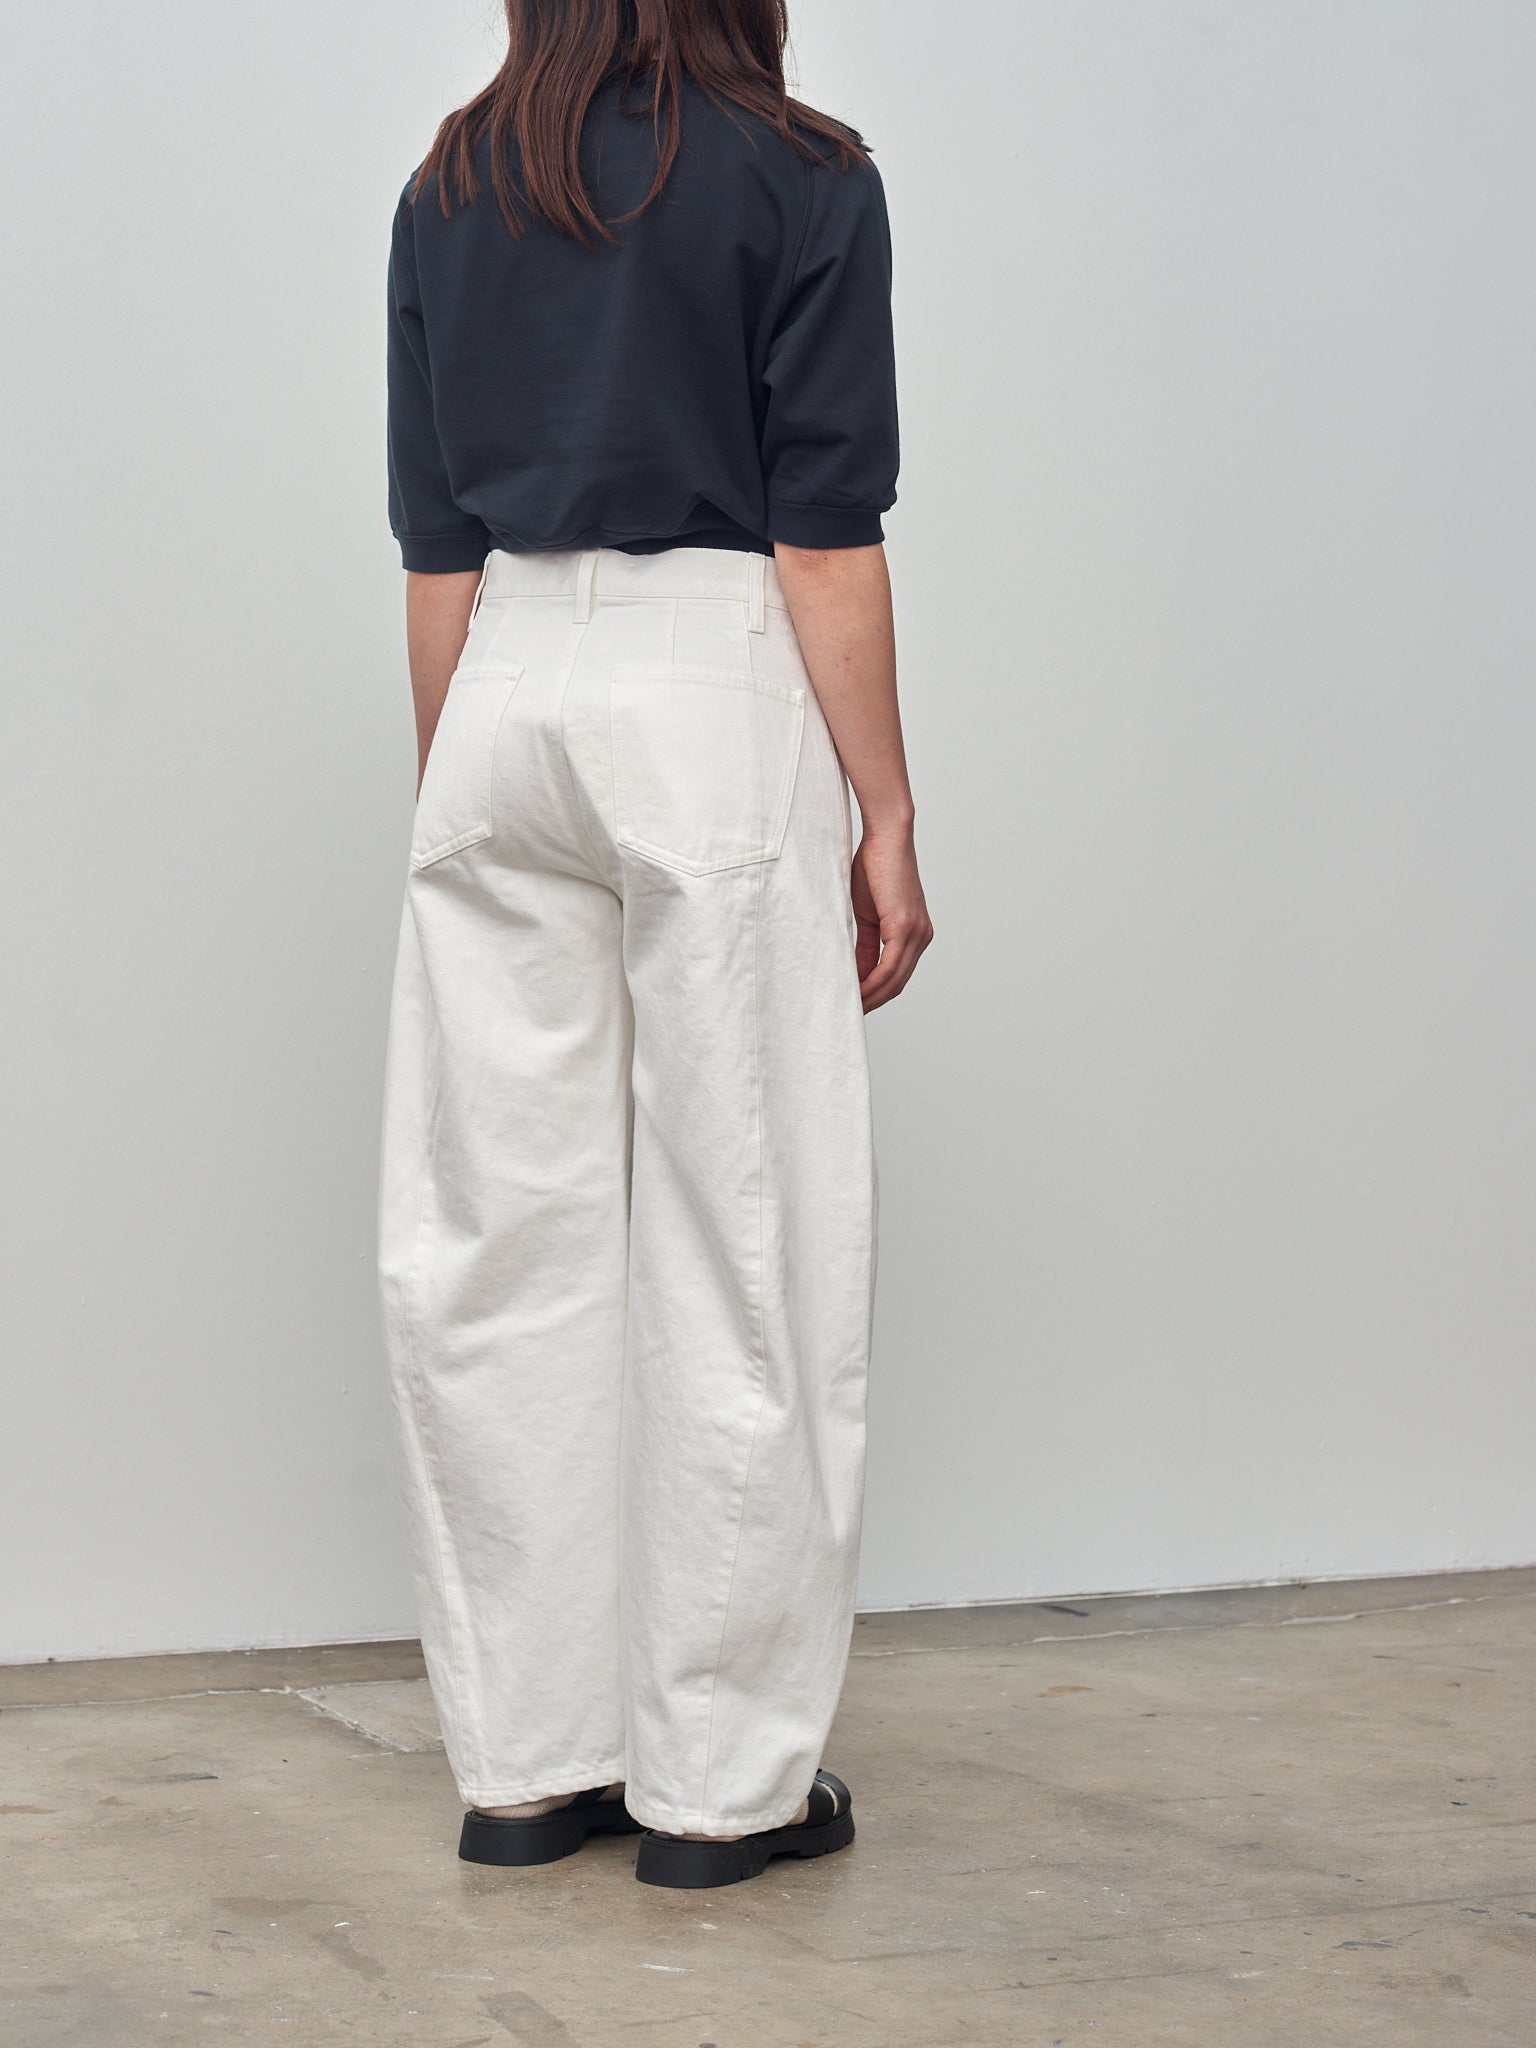 Namu Shop - Sayaka Davis Barrel Pants - Off White